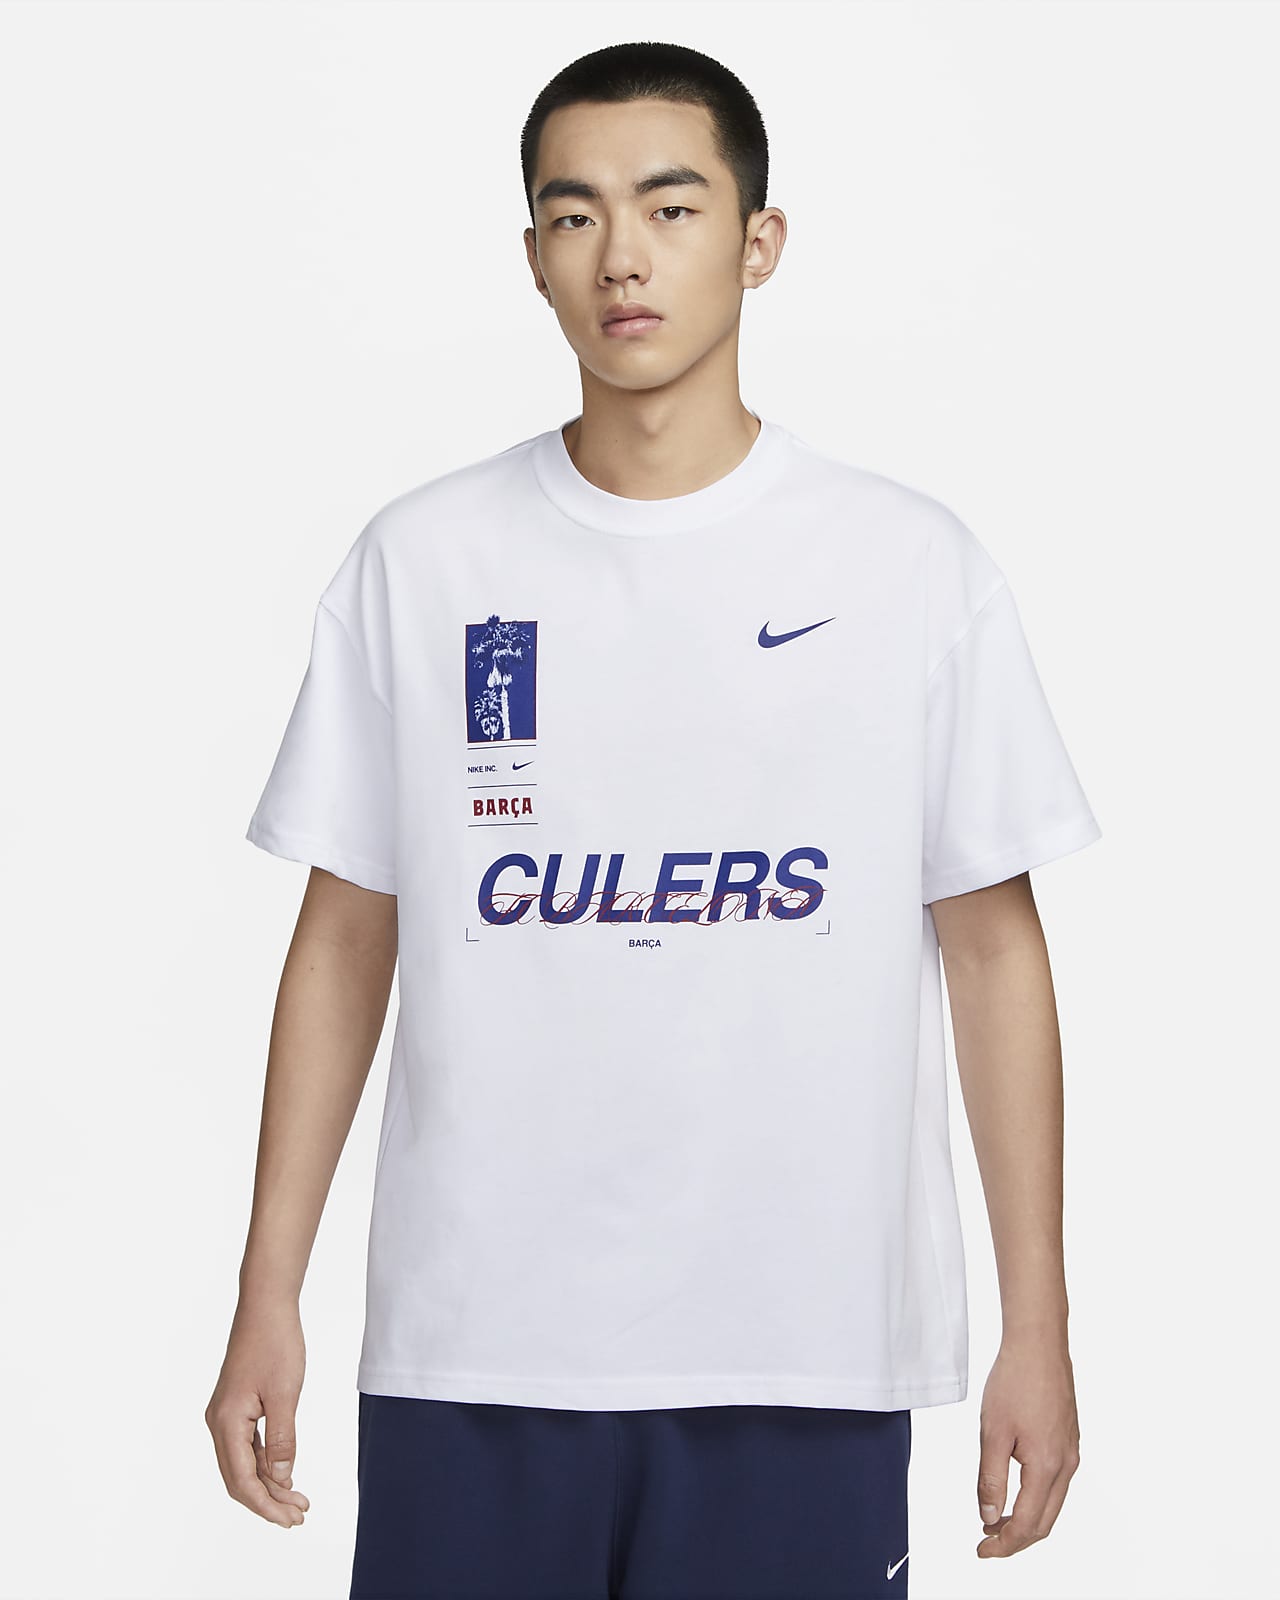 Nike Men's T-Shirt - Grey - L